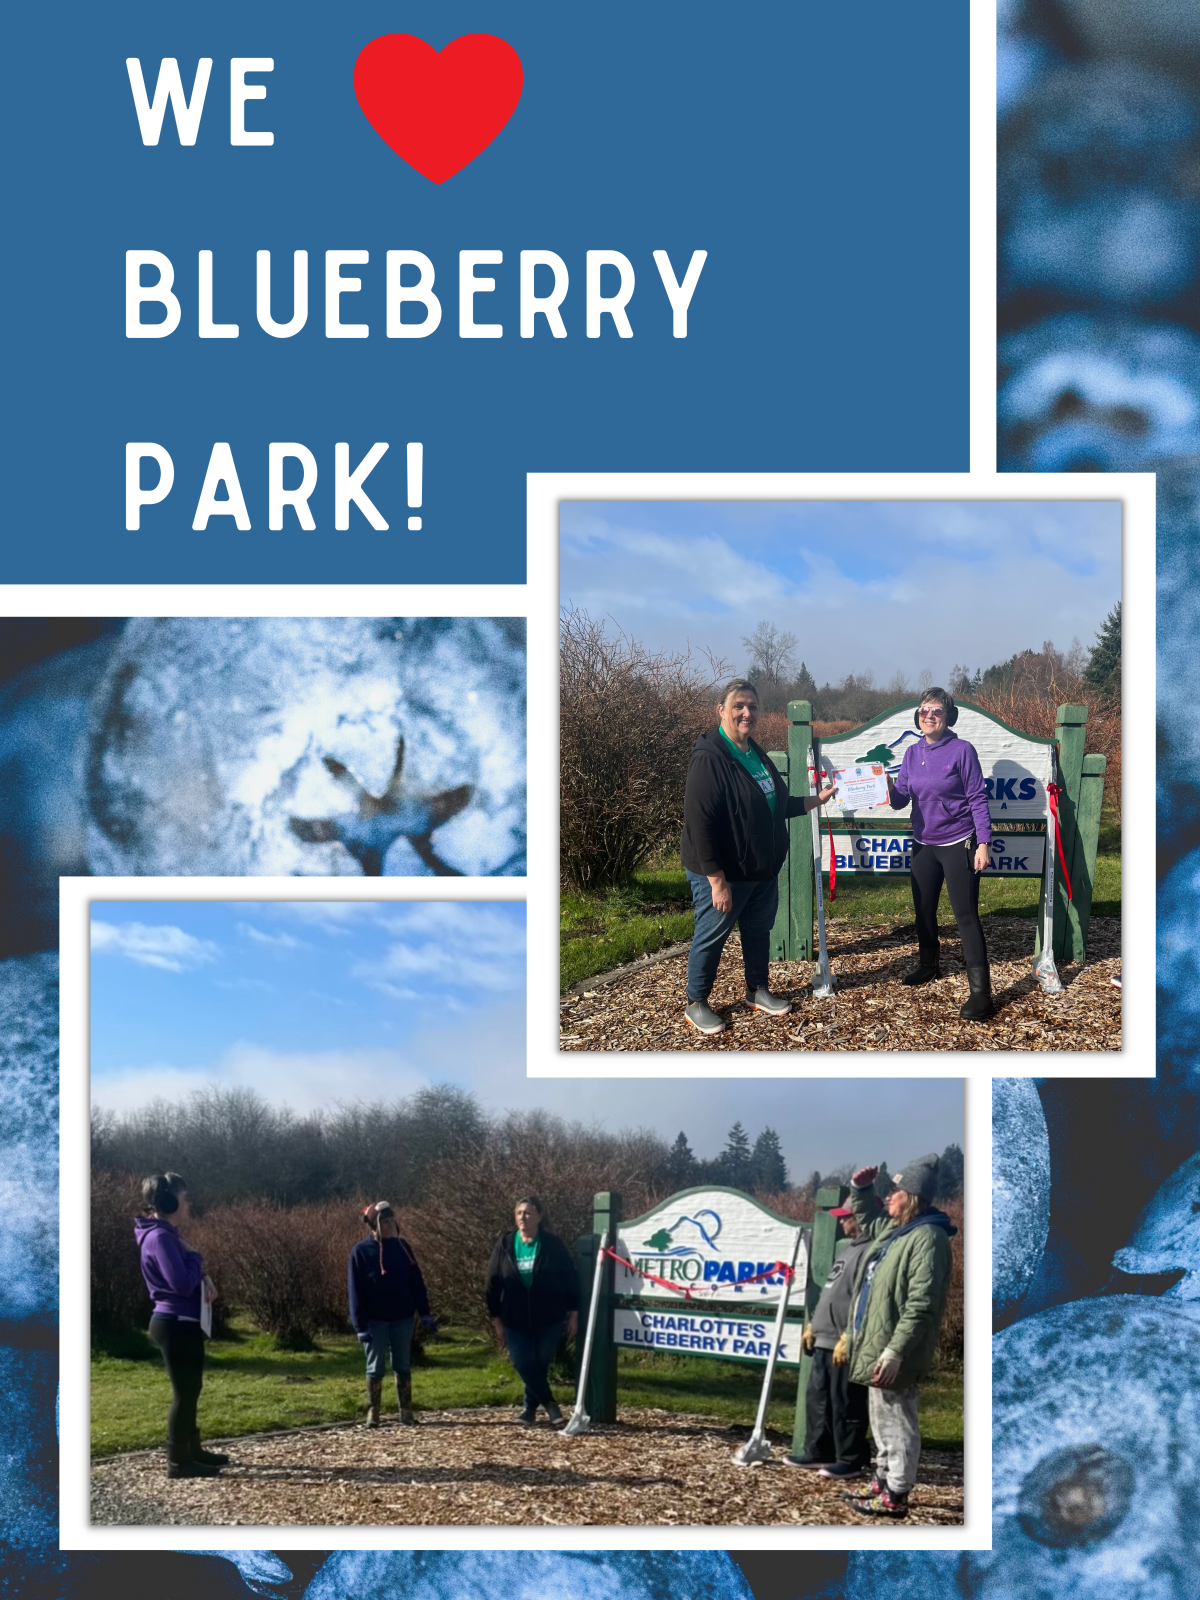 We Heart Blueberry Park!